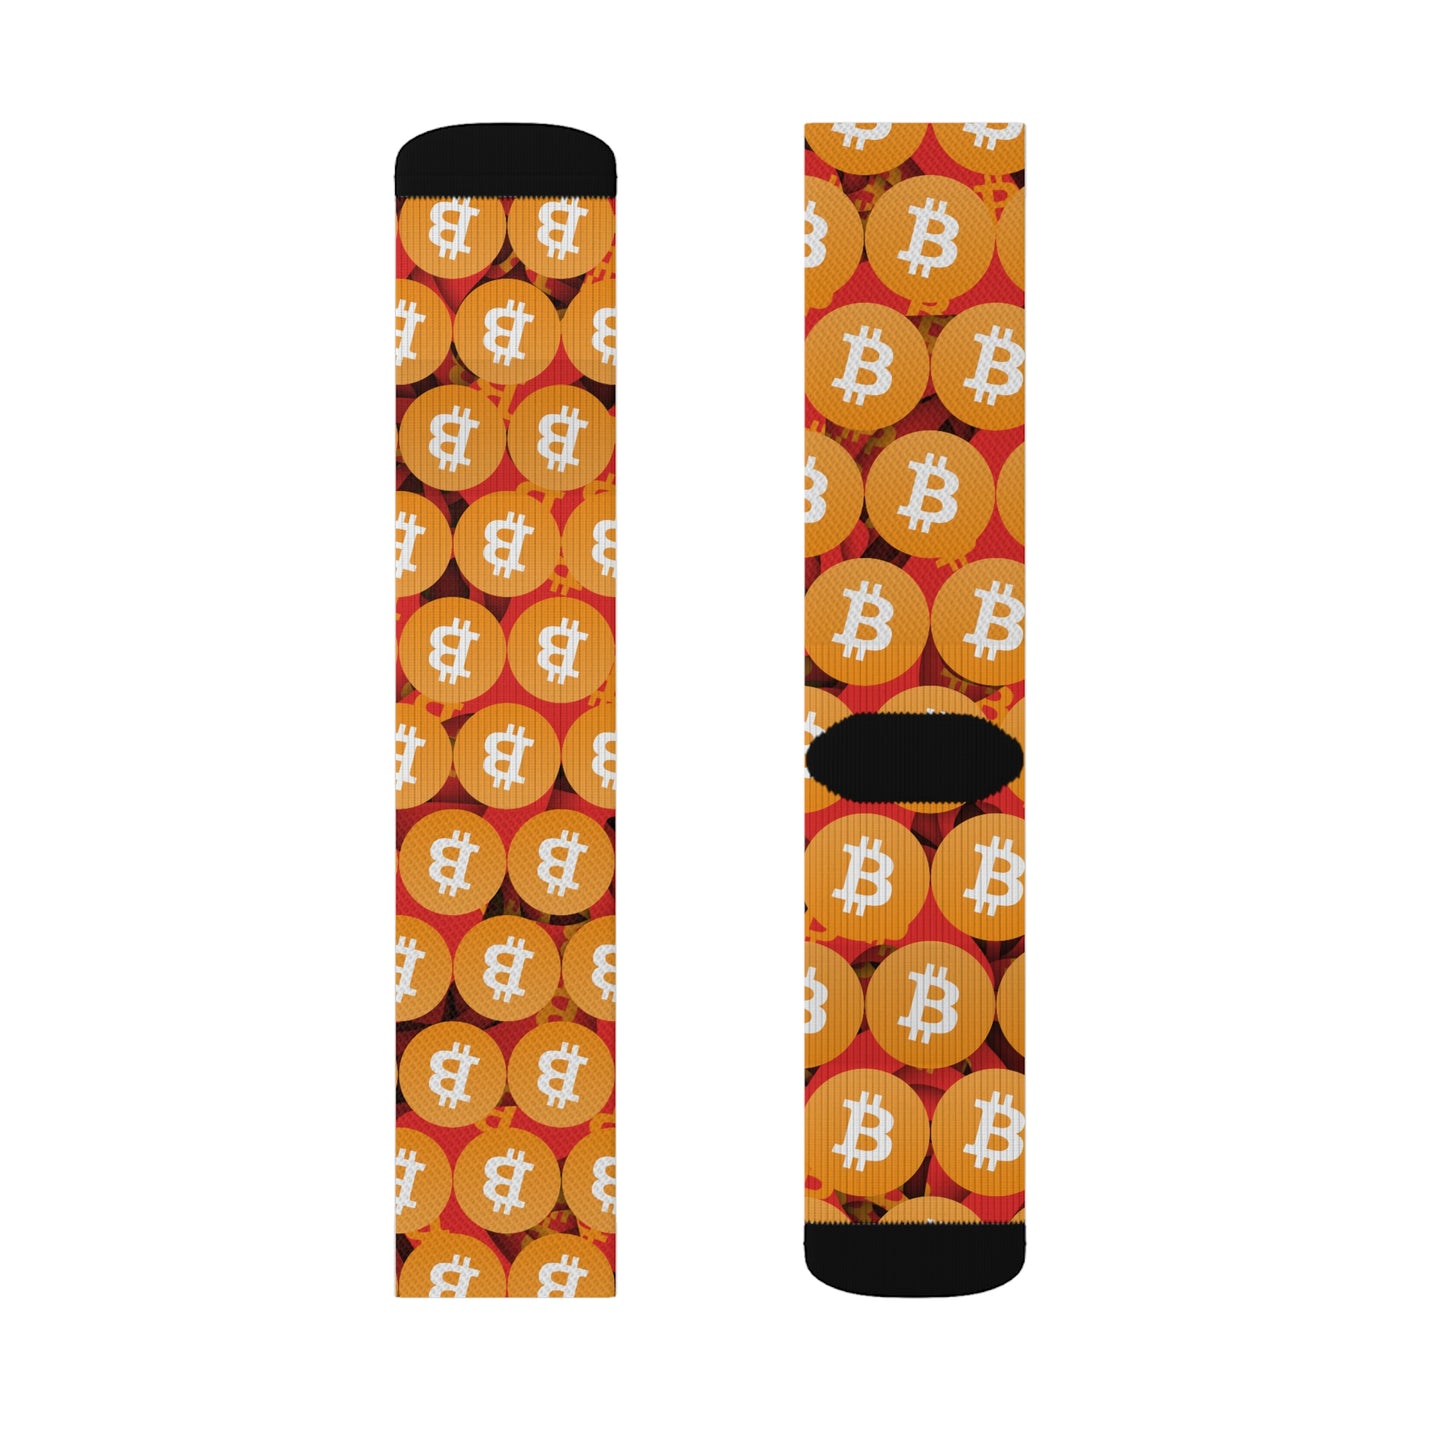 Bitcoin Abstract Socks